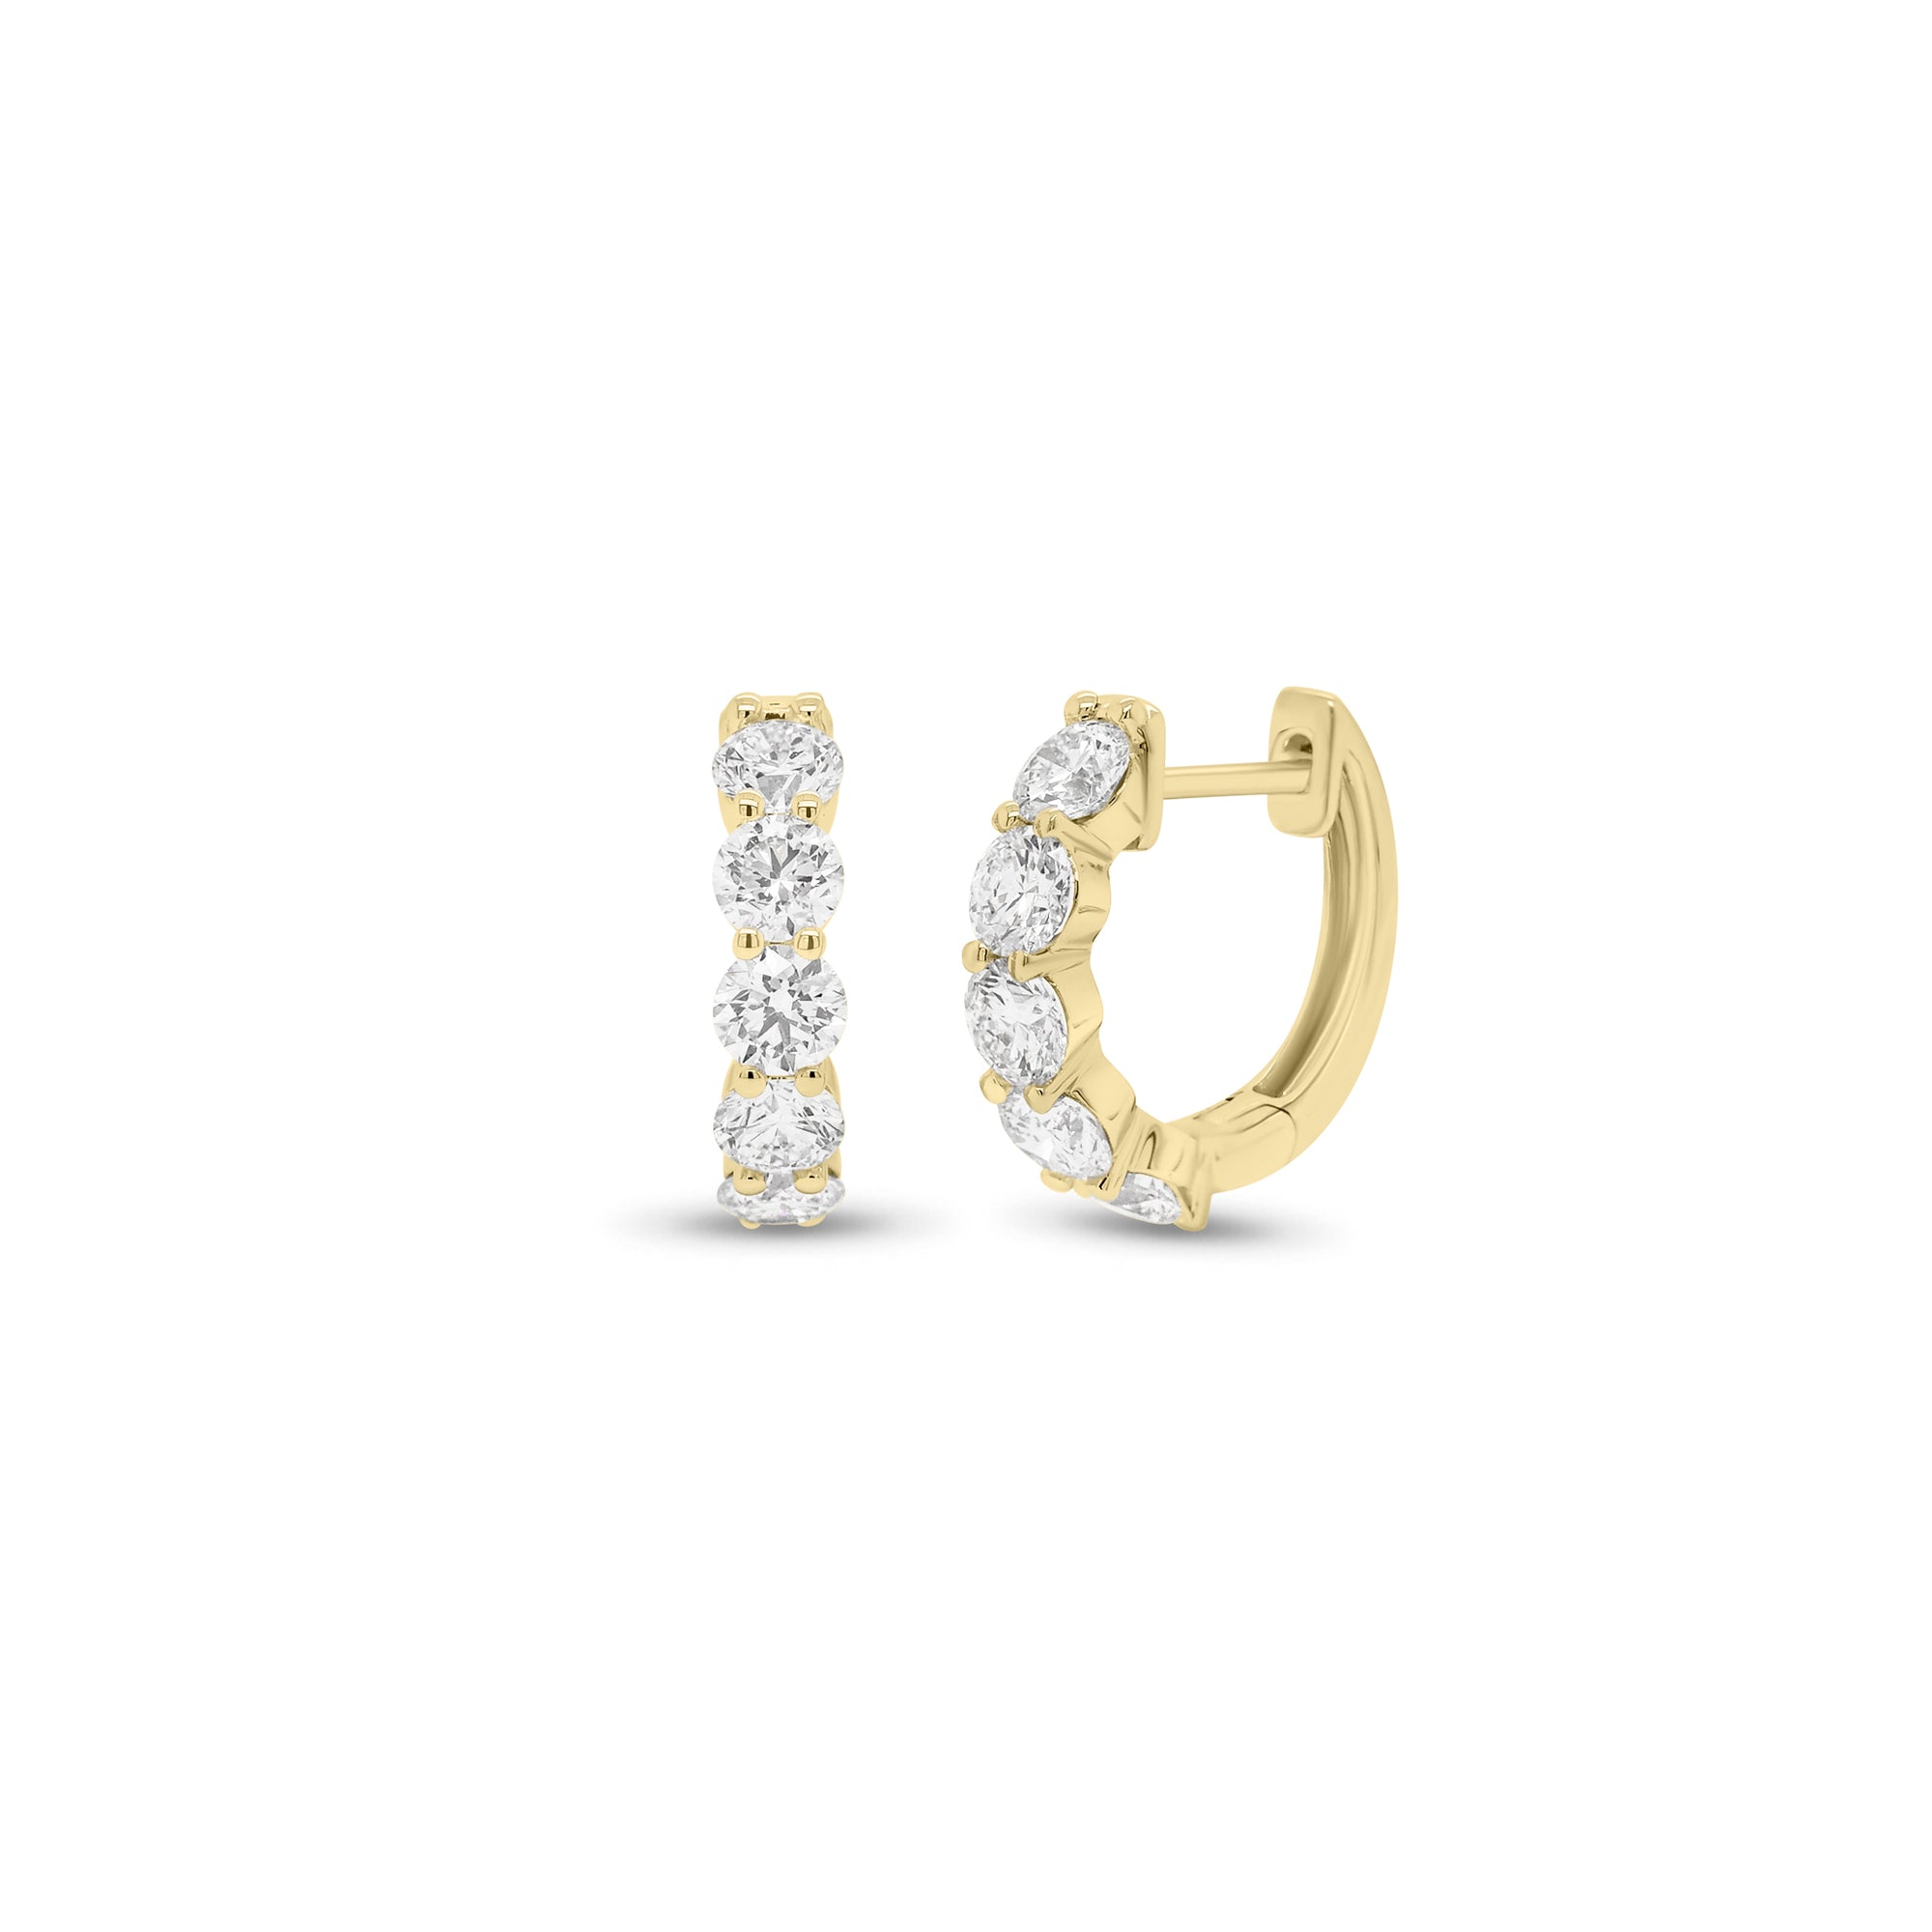 1.58 ct Diamond Huggie Earrings - 18K gold weighing 2.59 grams - 10 round diamonds weighing 1.58 carats